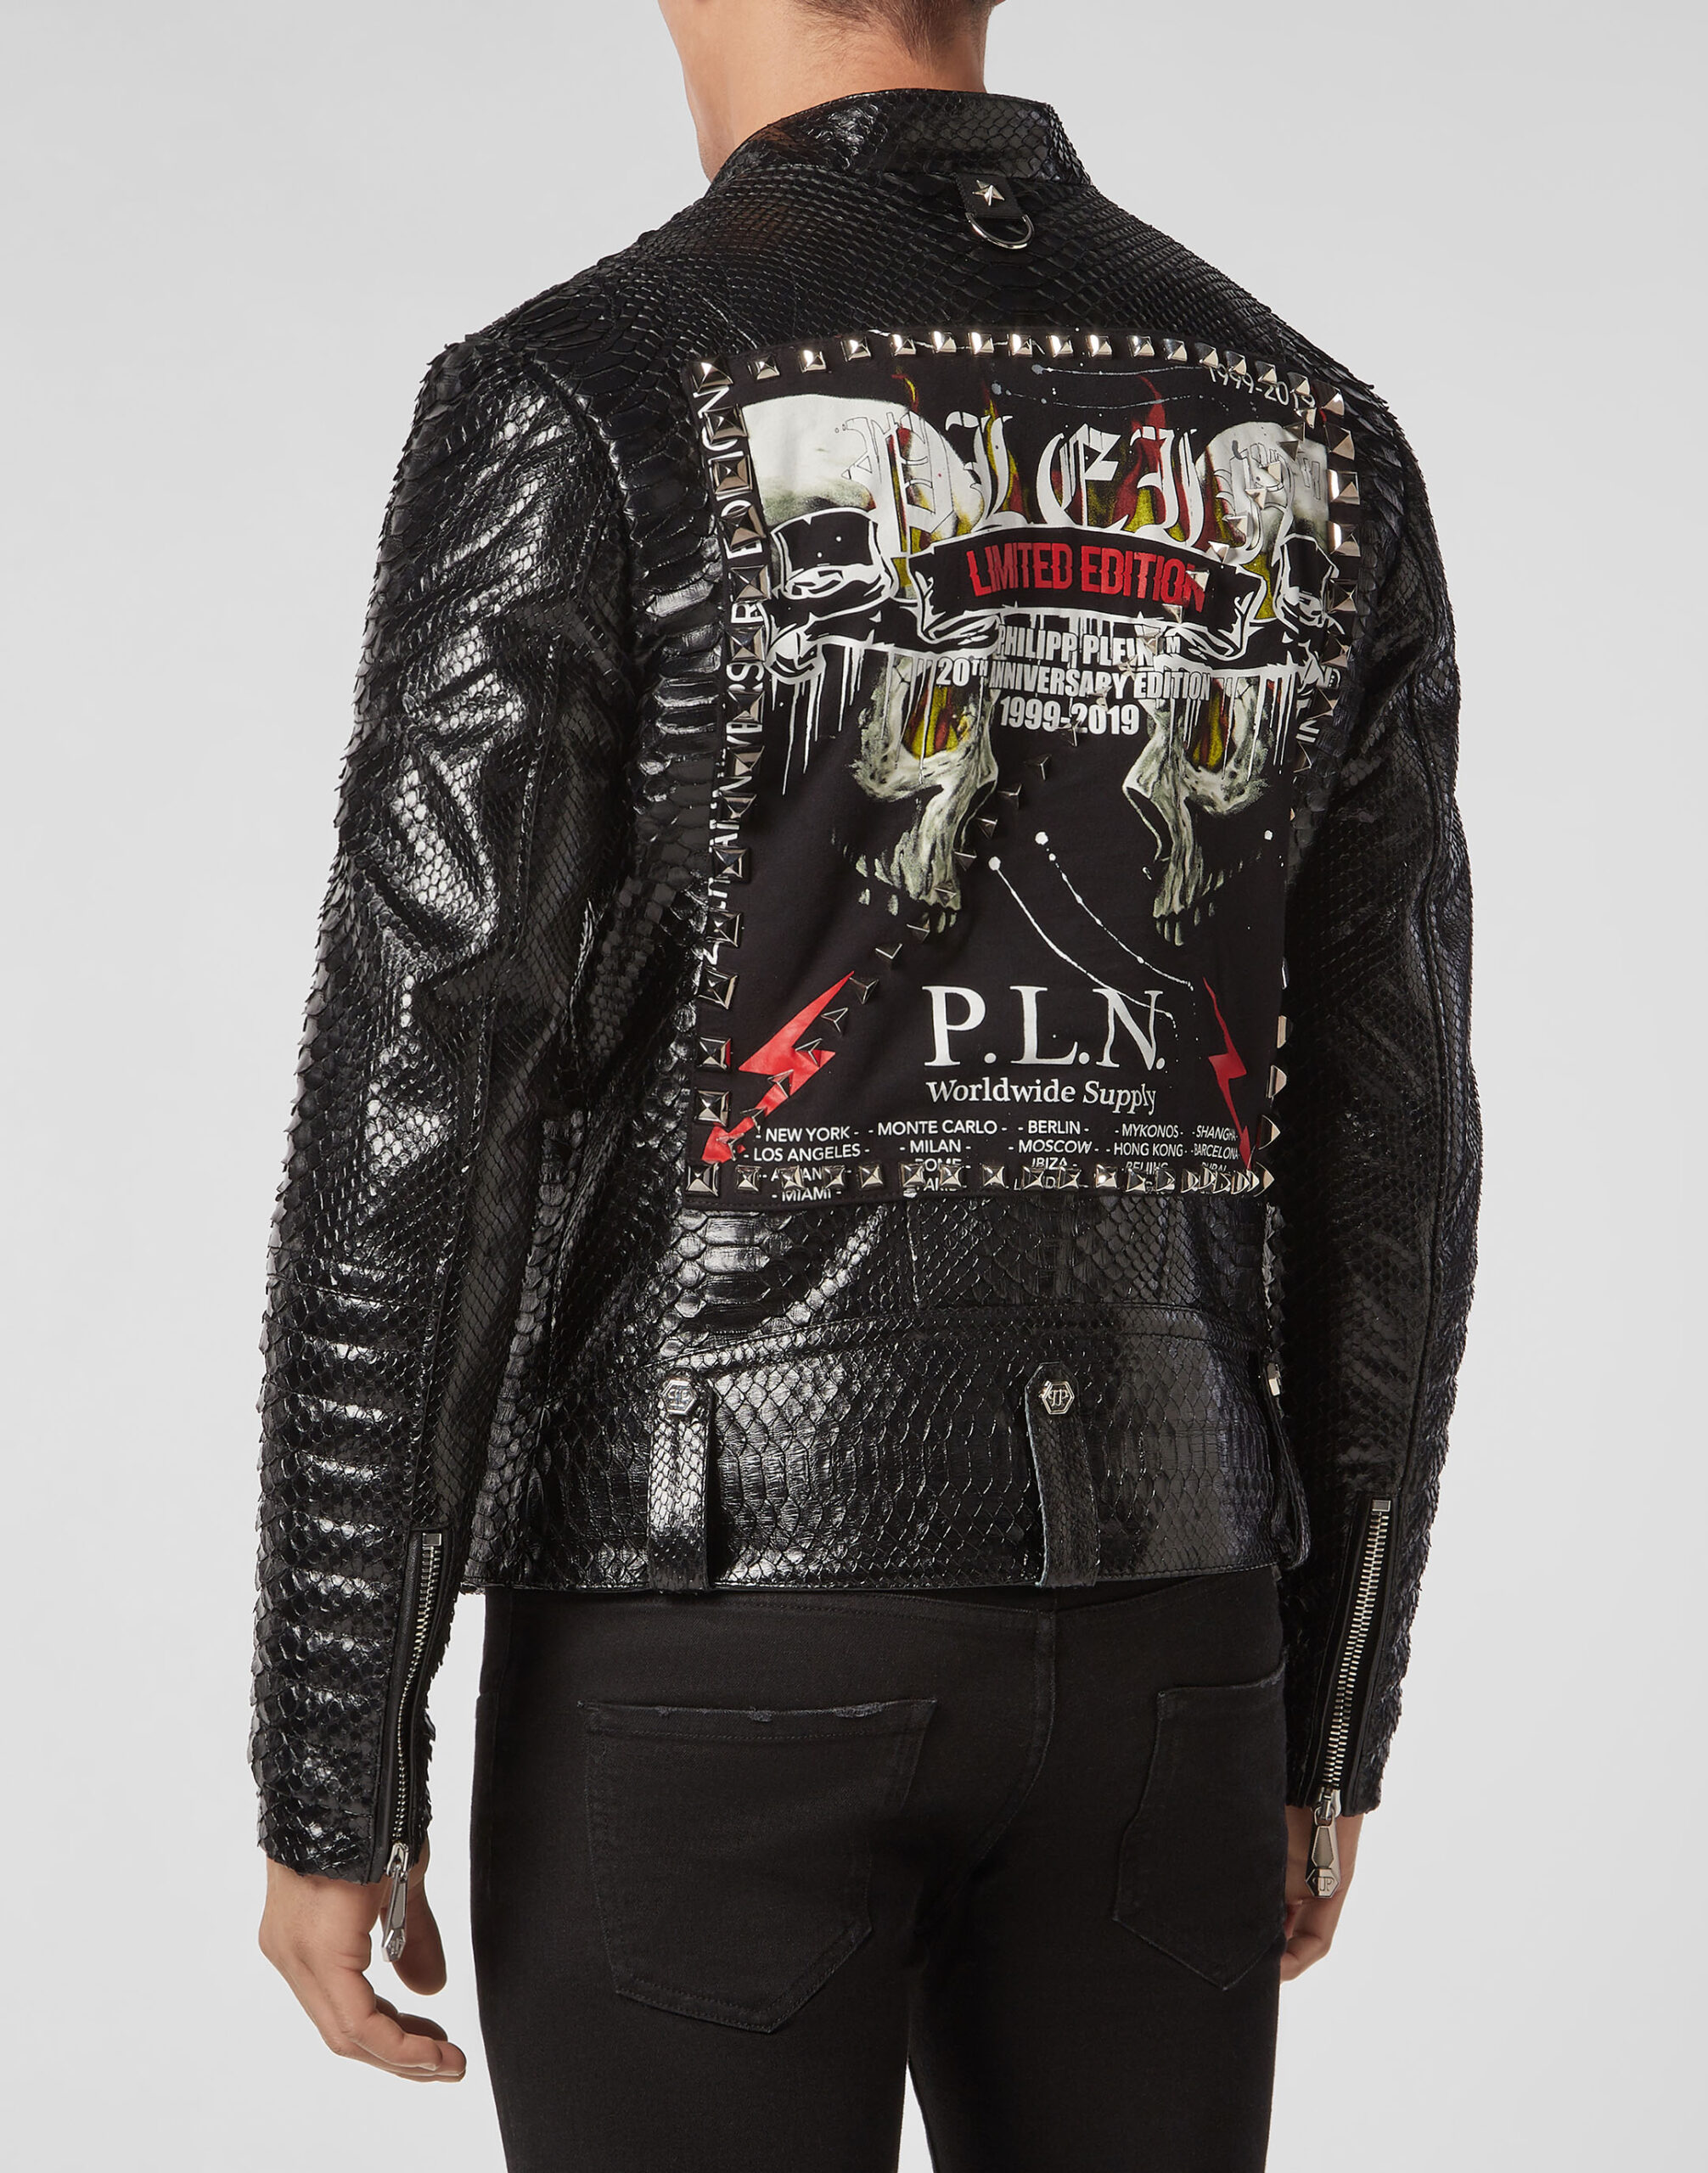 Philipp Plein Python Biker Jacket - Leather Guys: Luxury Leather Jackets